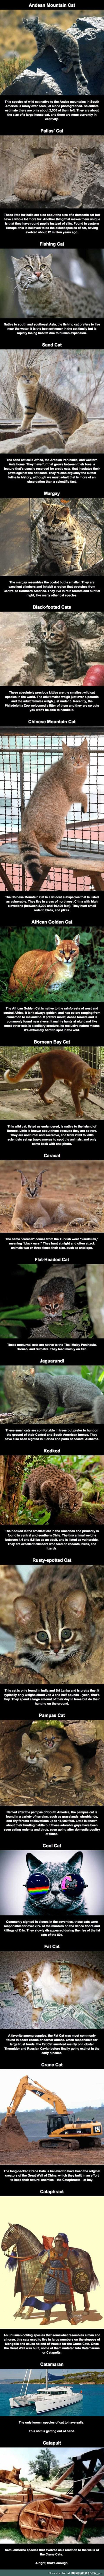 Very unusual cat species